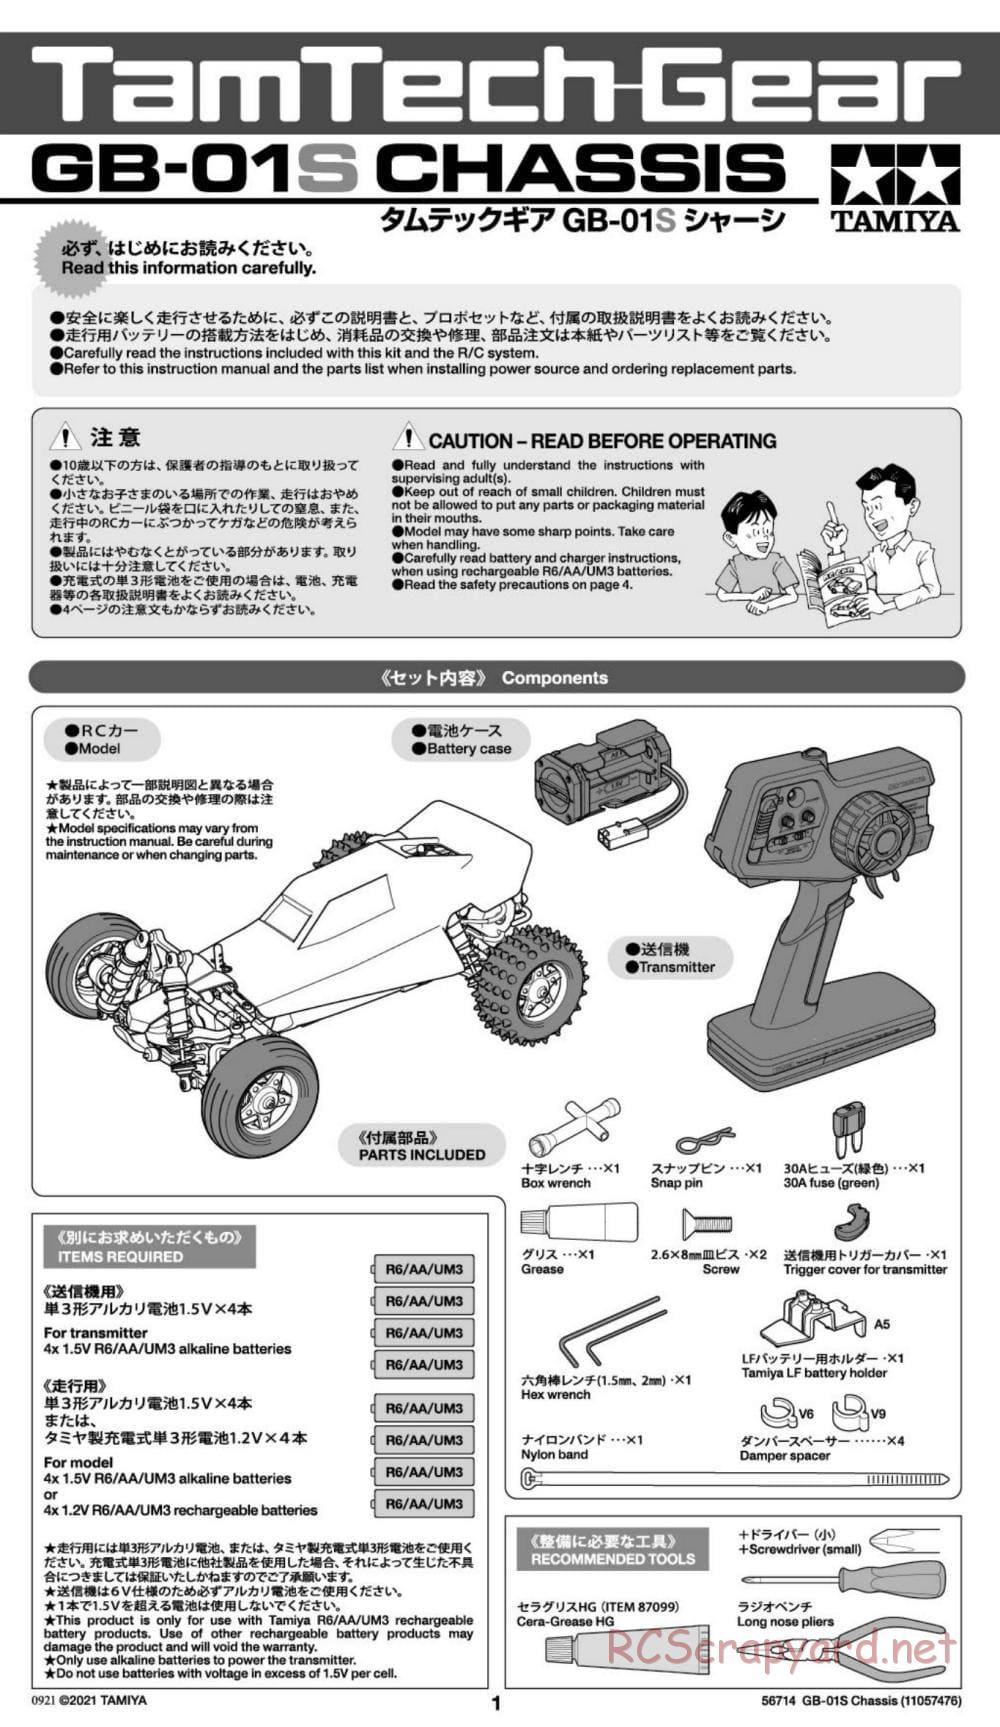 Tamiya - GB-01S Chassis - Manual - Page 1